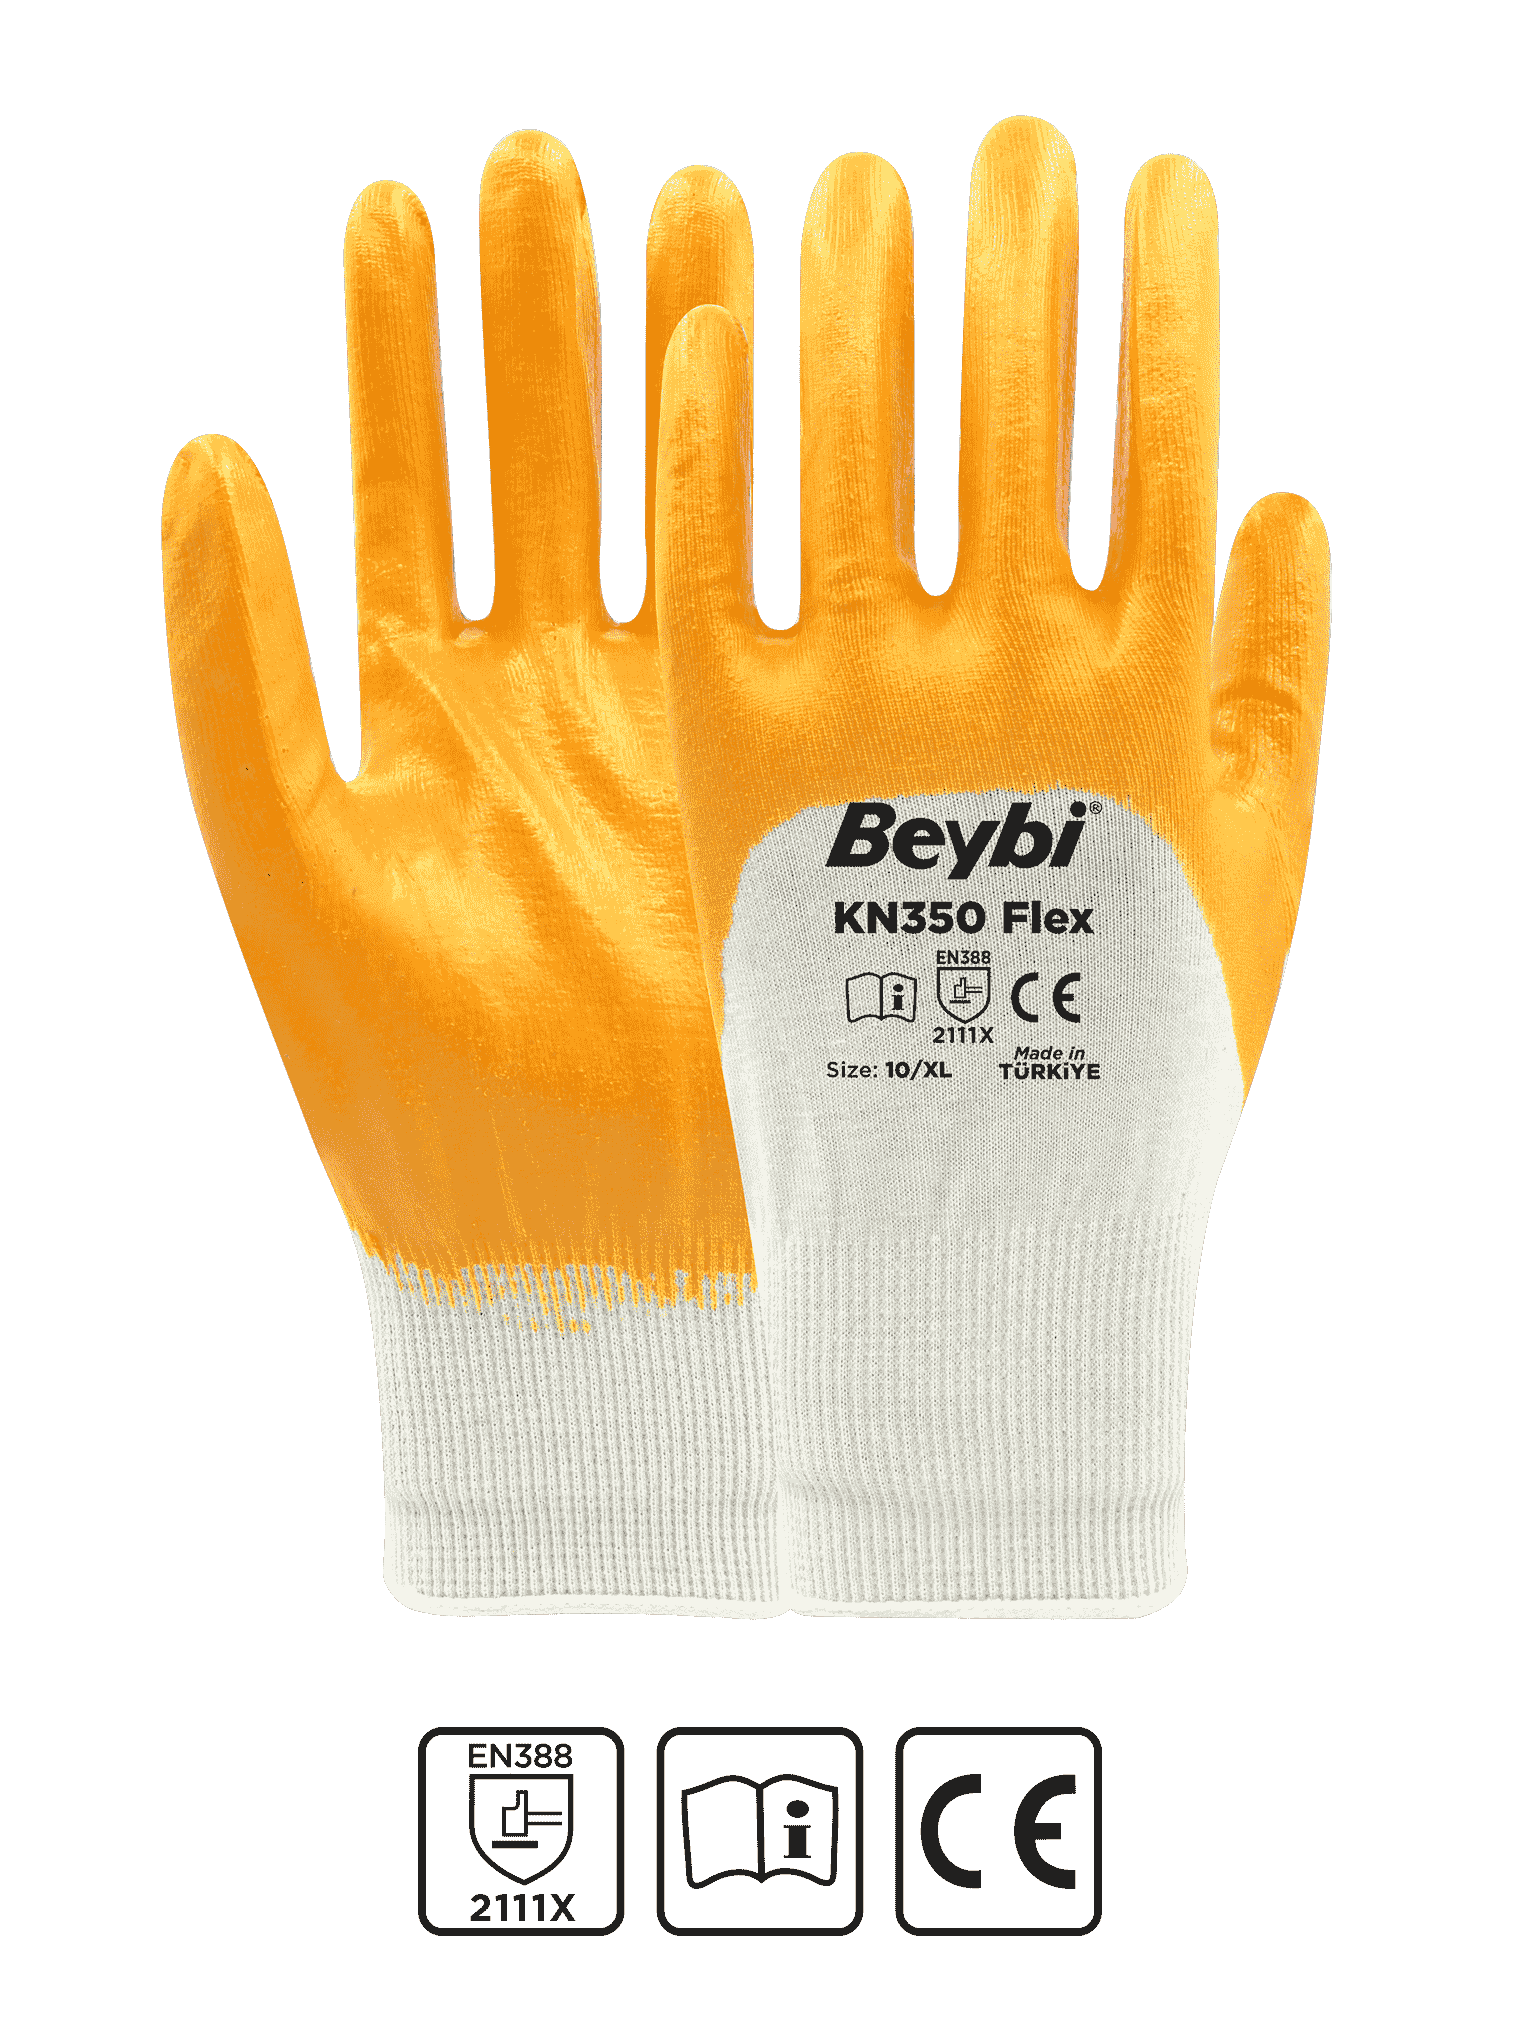 KN350 Flex Nitrile Coated Cotton Glove